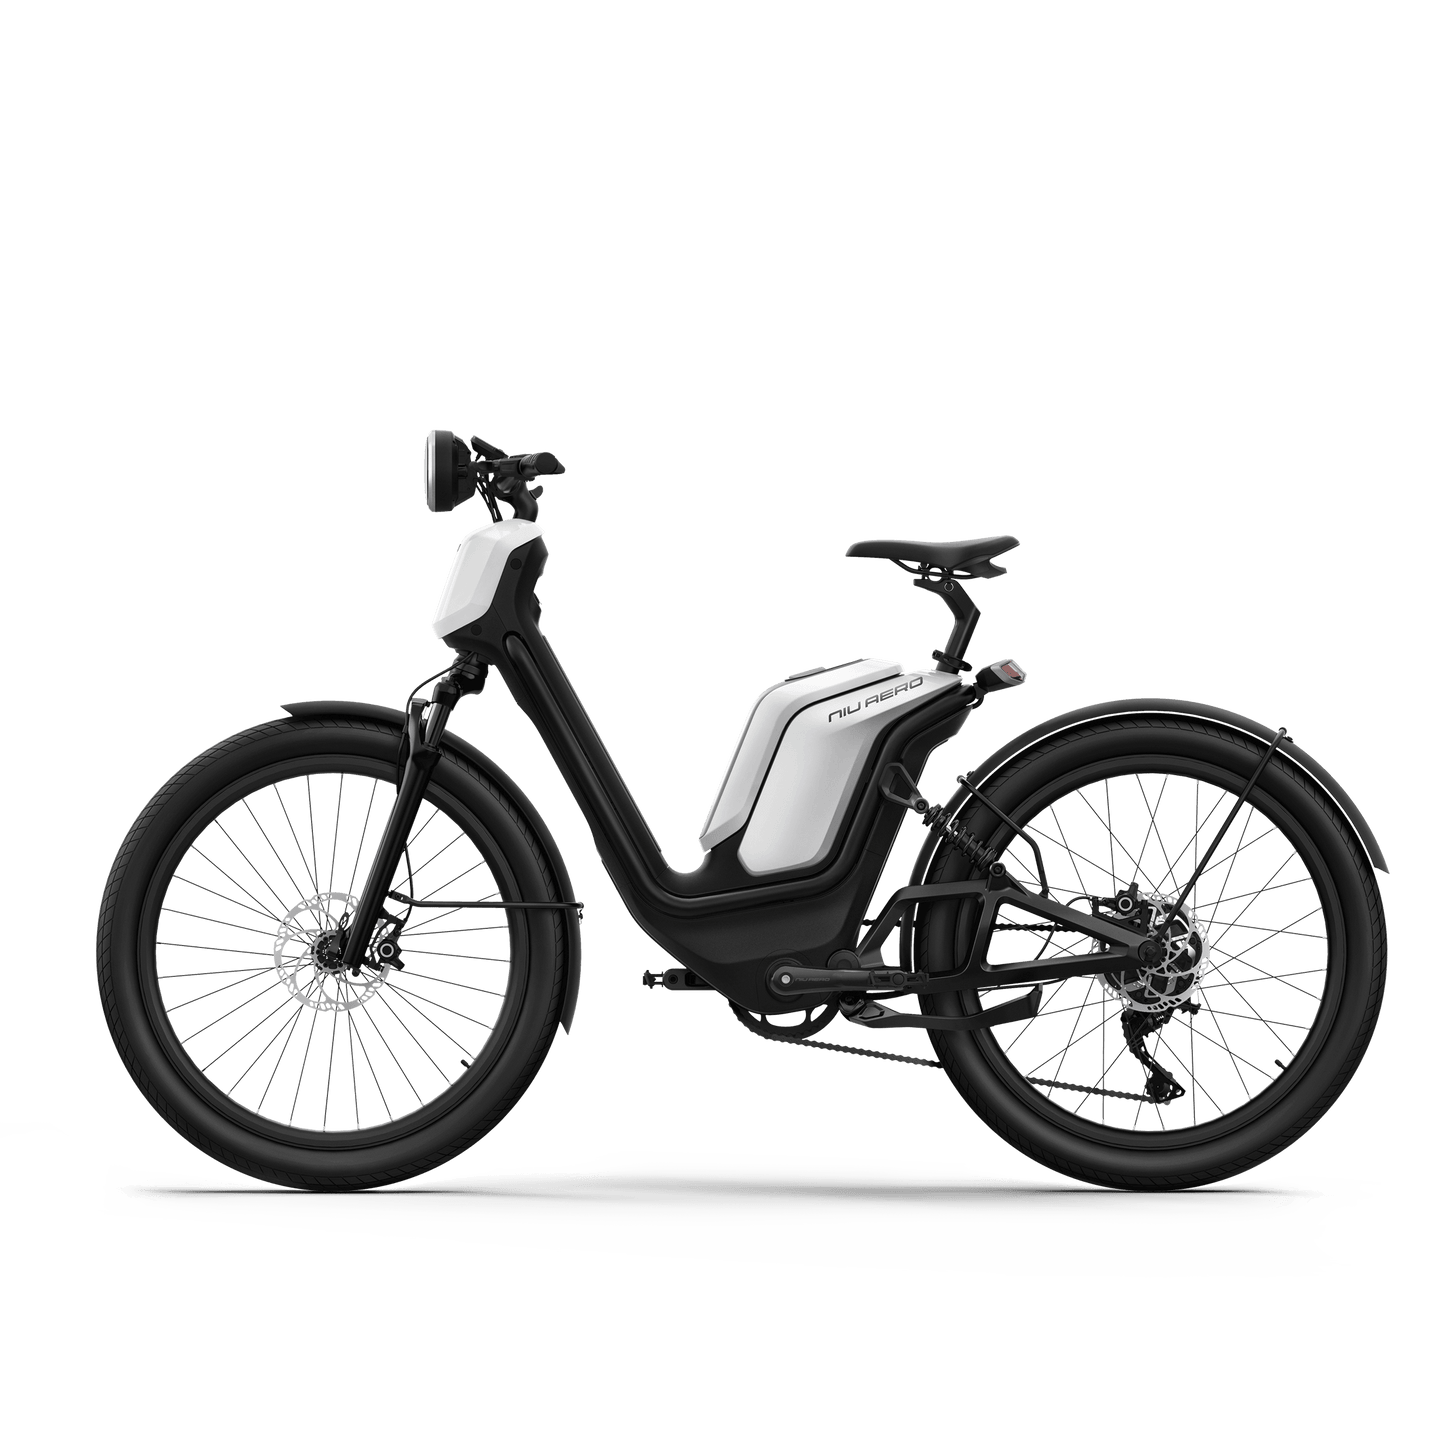 NIU EUB-01 Pro Electric Bike For Adults